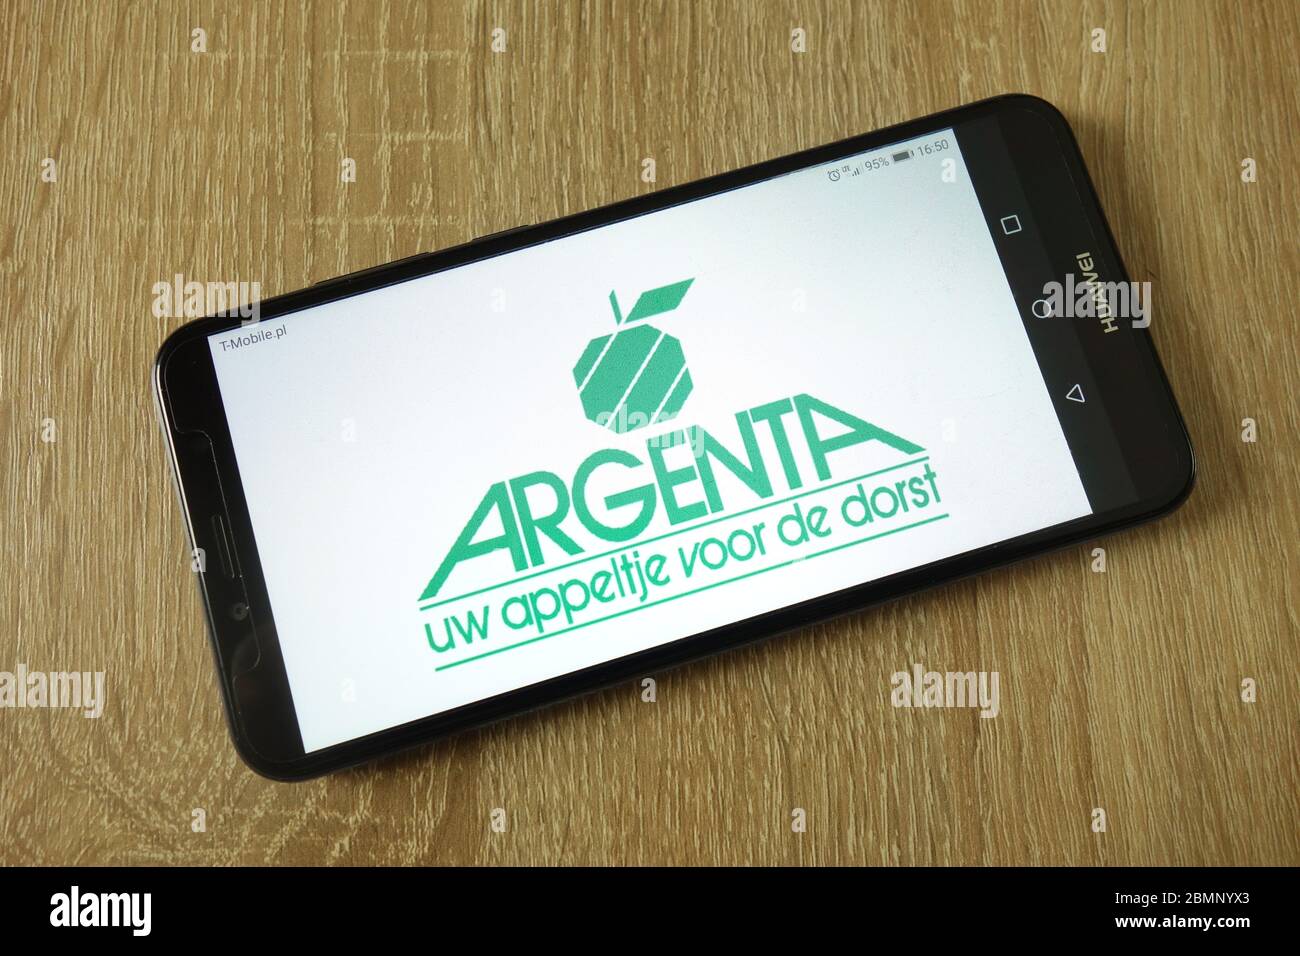 Argenta bank logo displayed on smartphone Stock Photo